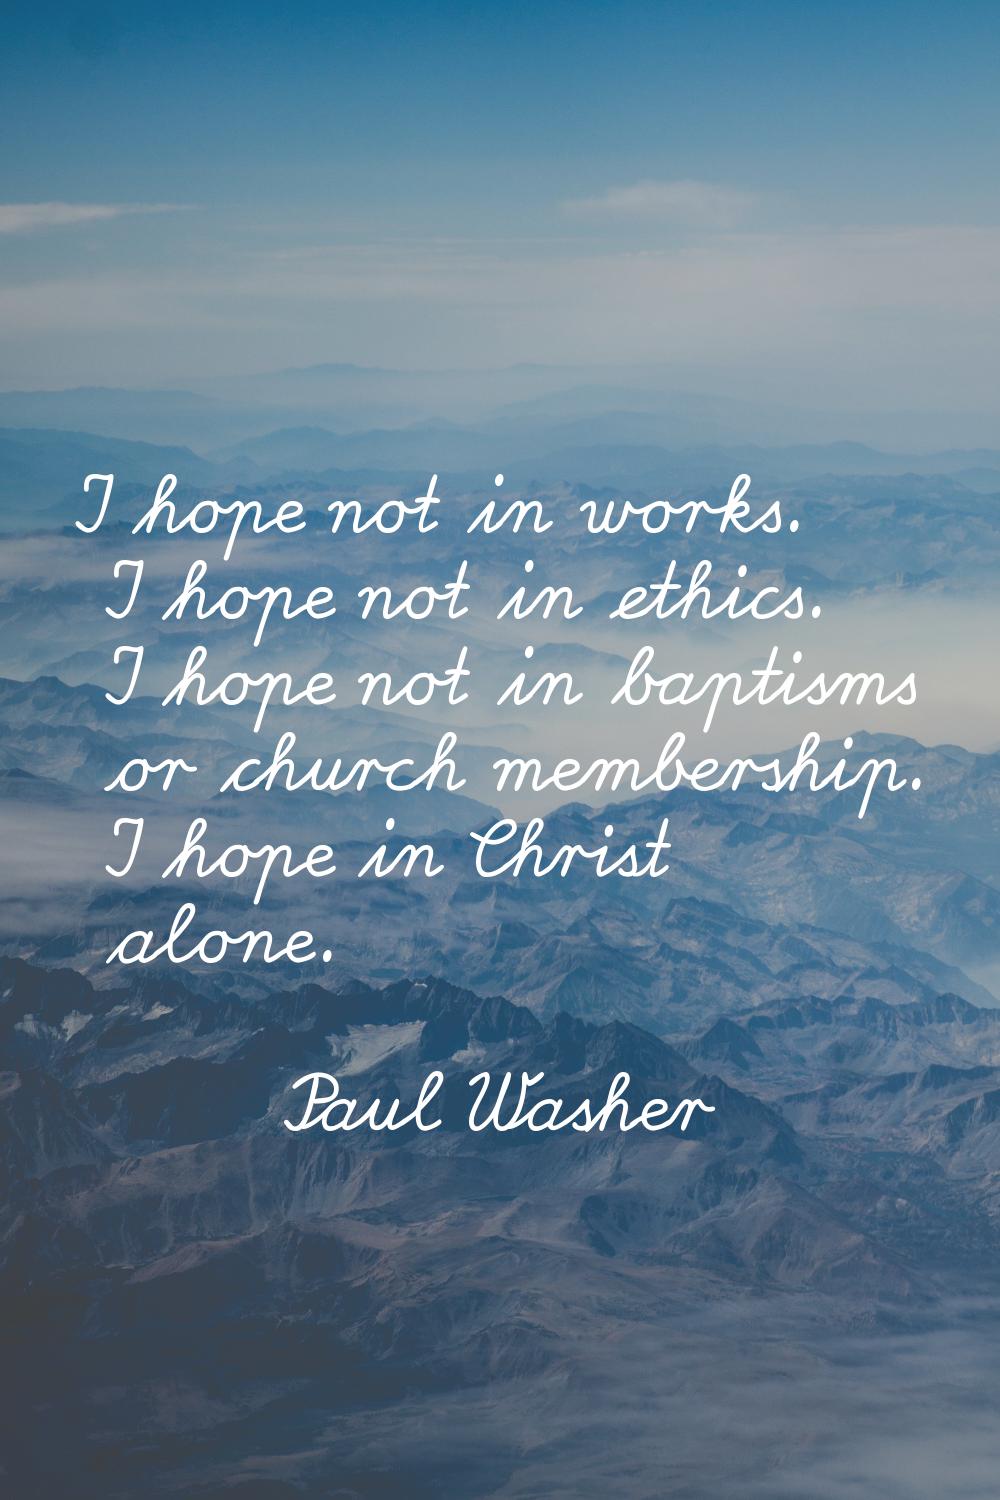 I hope not in works. I hope not in ethics. I hope not in baptisms or church membership. I hope in C